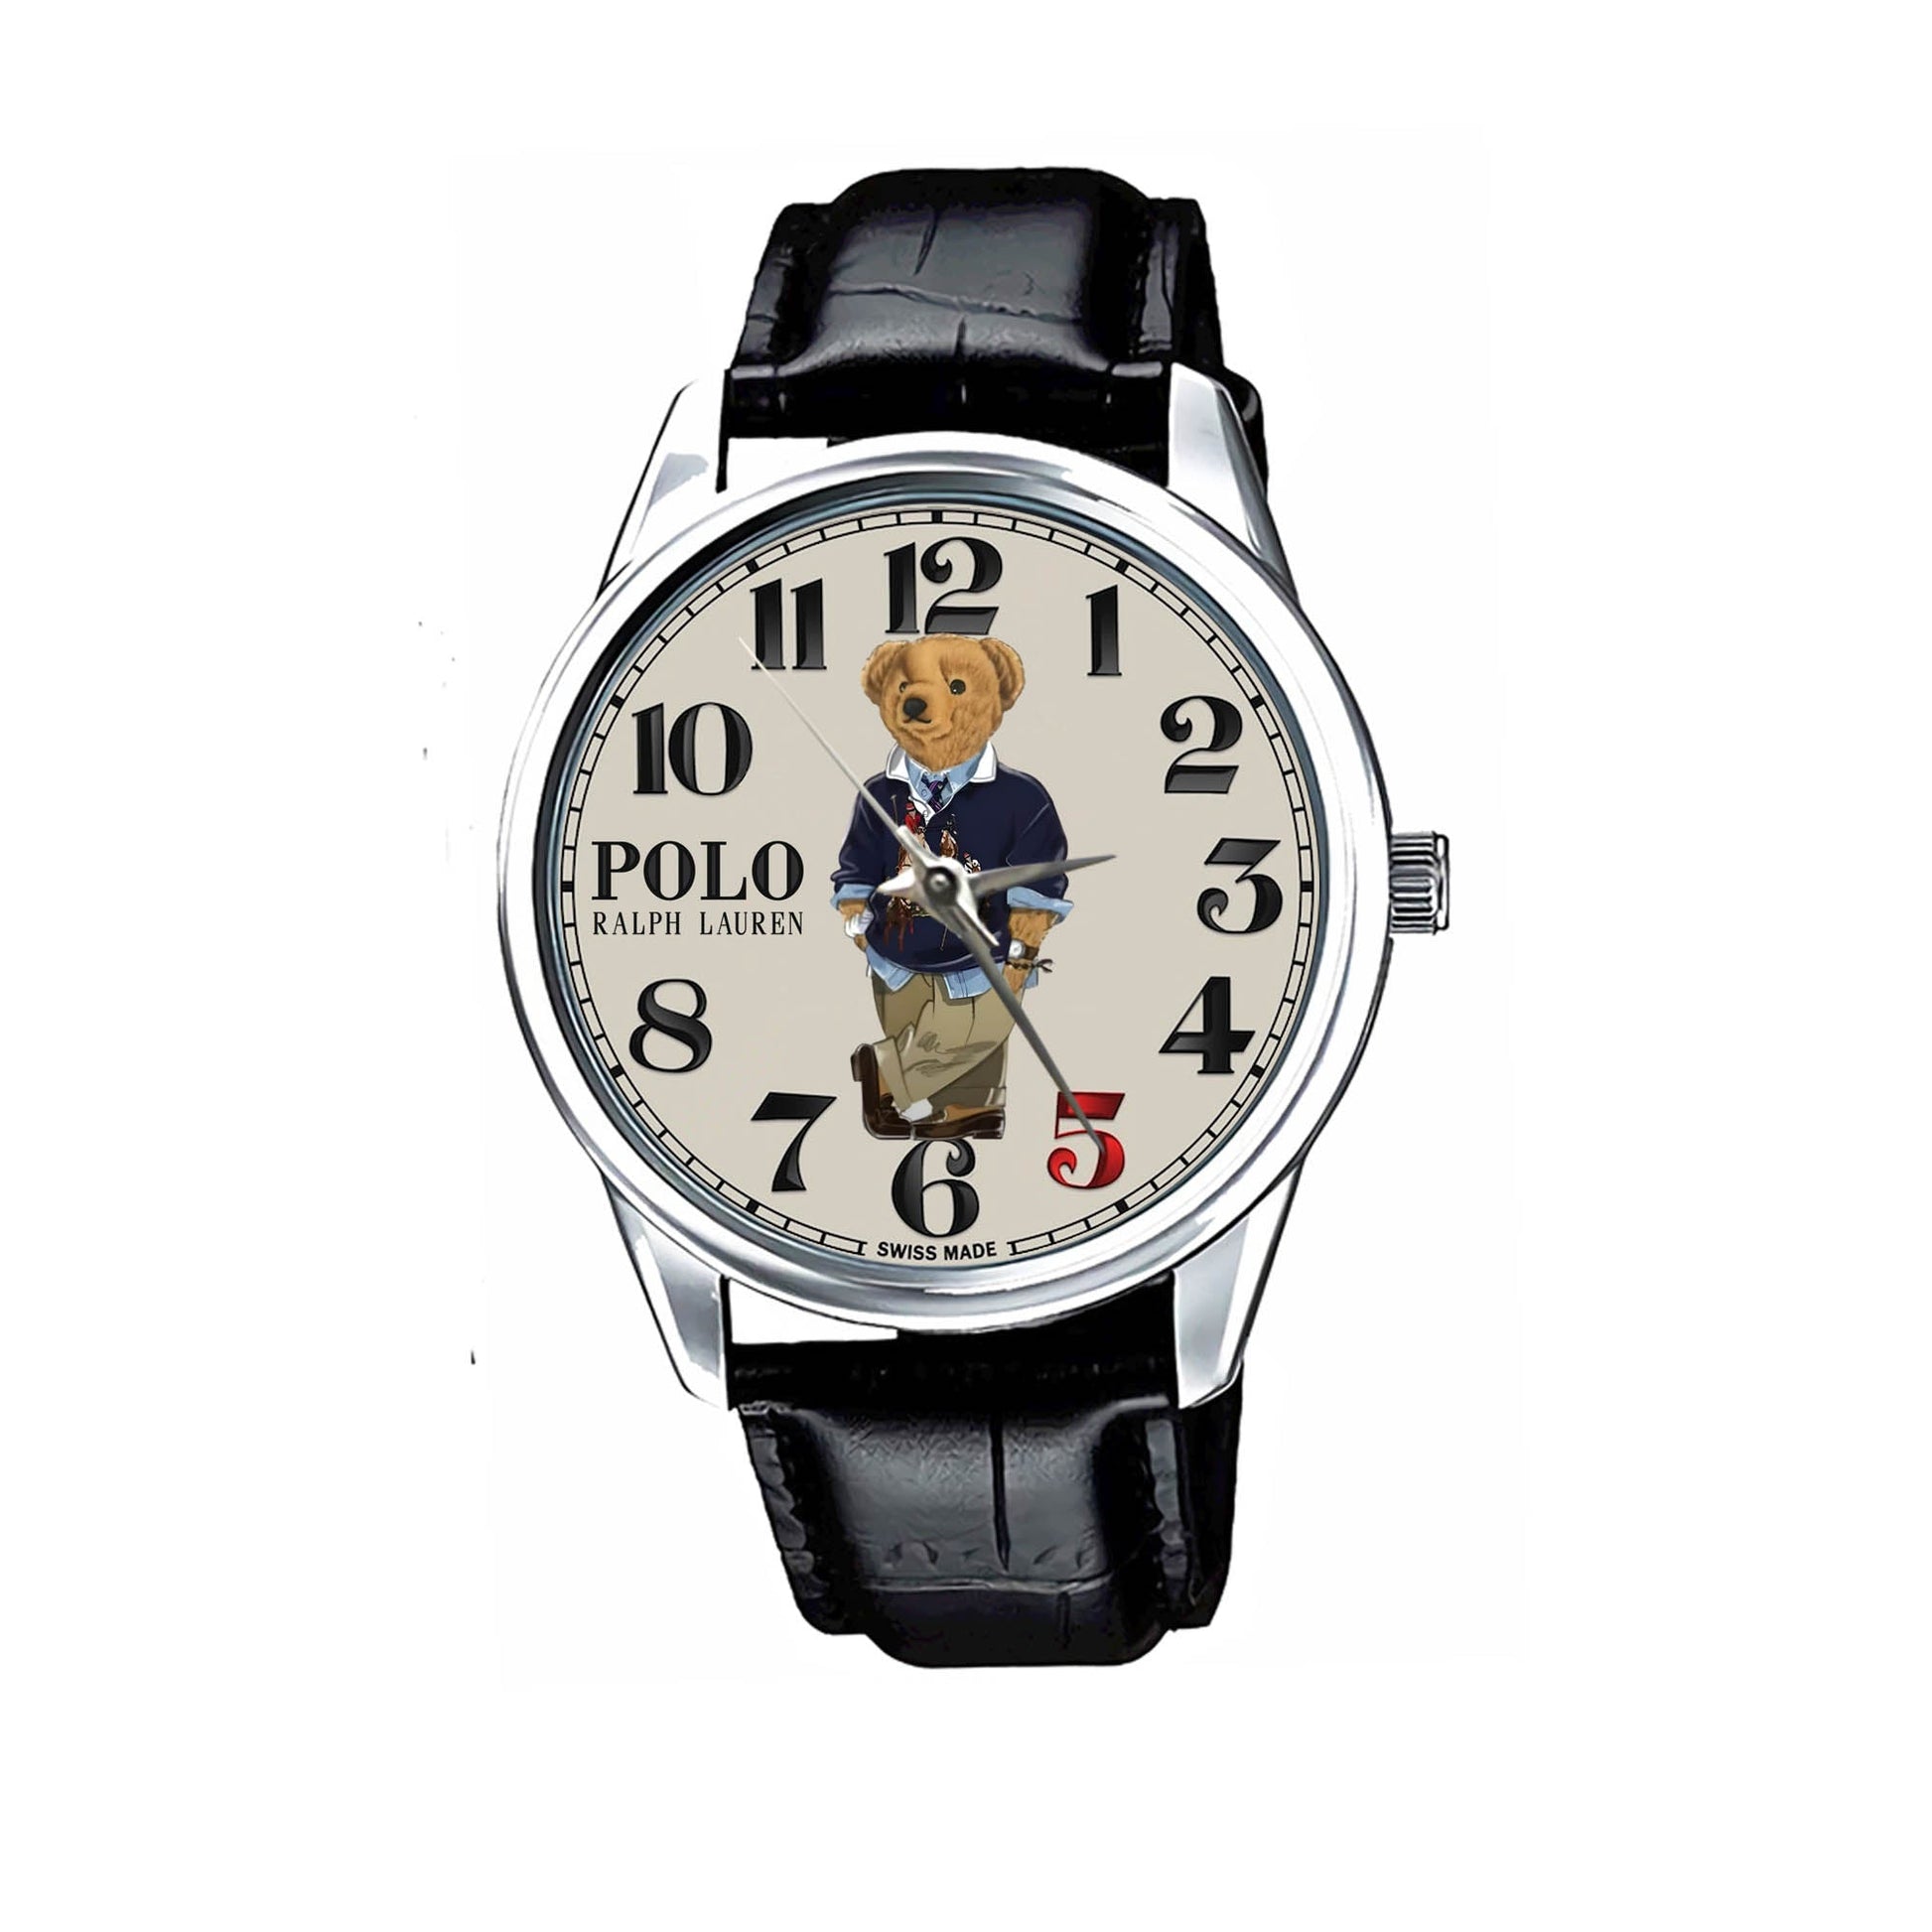 Polo Ralph Lauren's Polo Bear Watches KP454